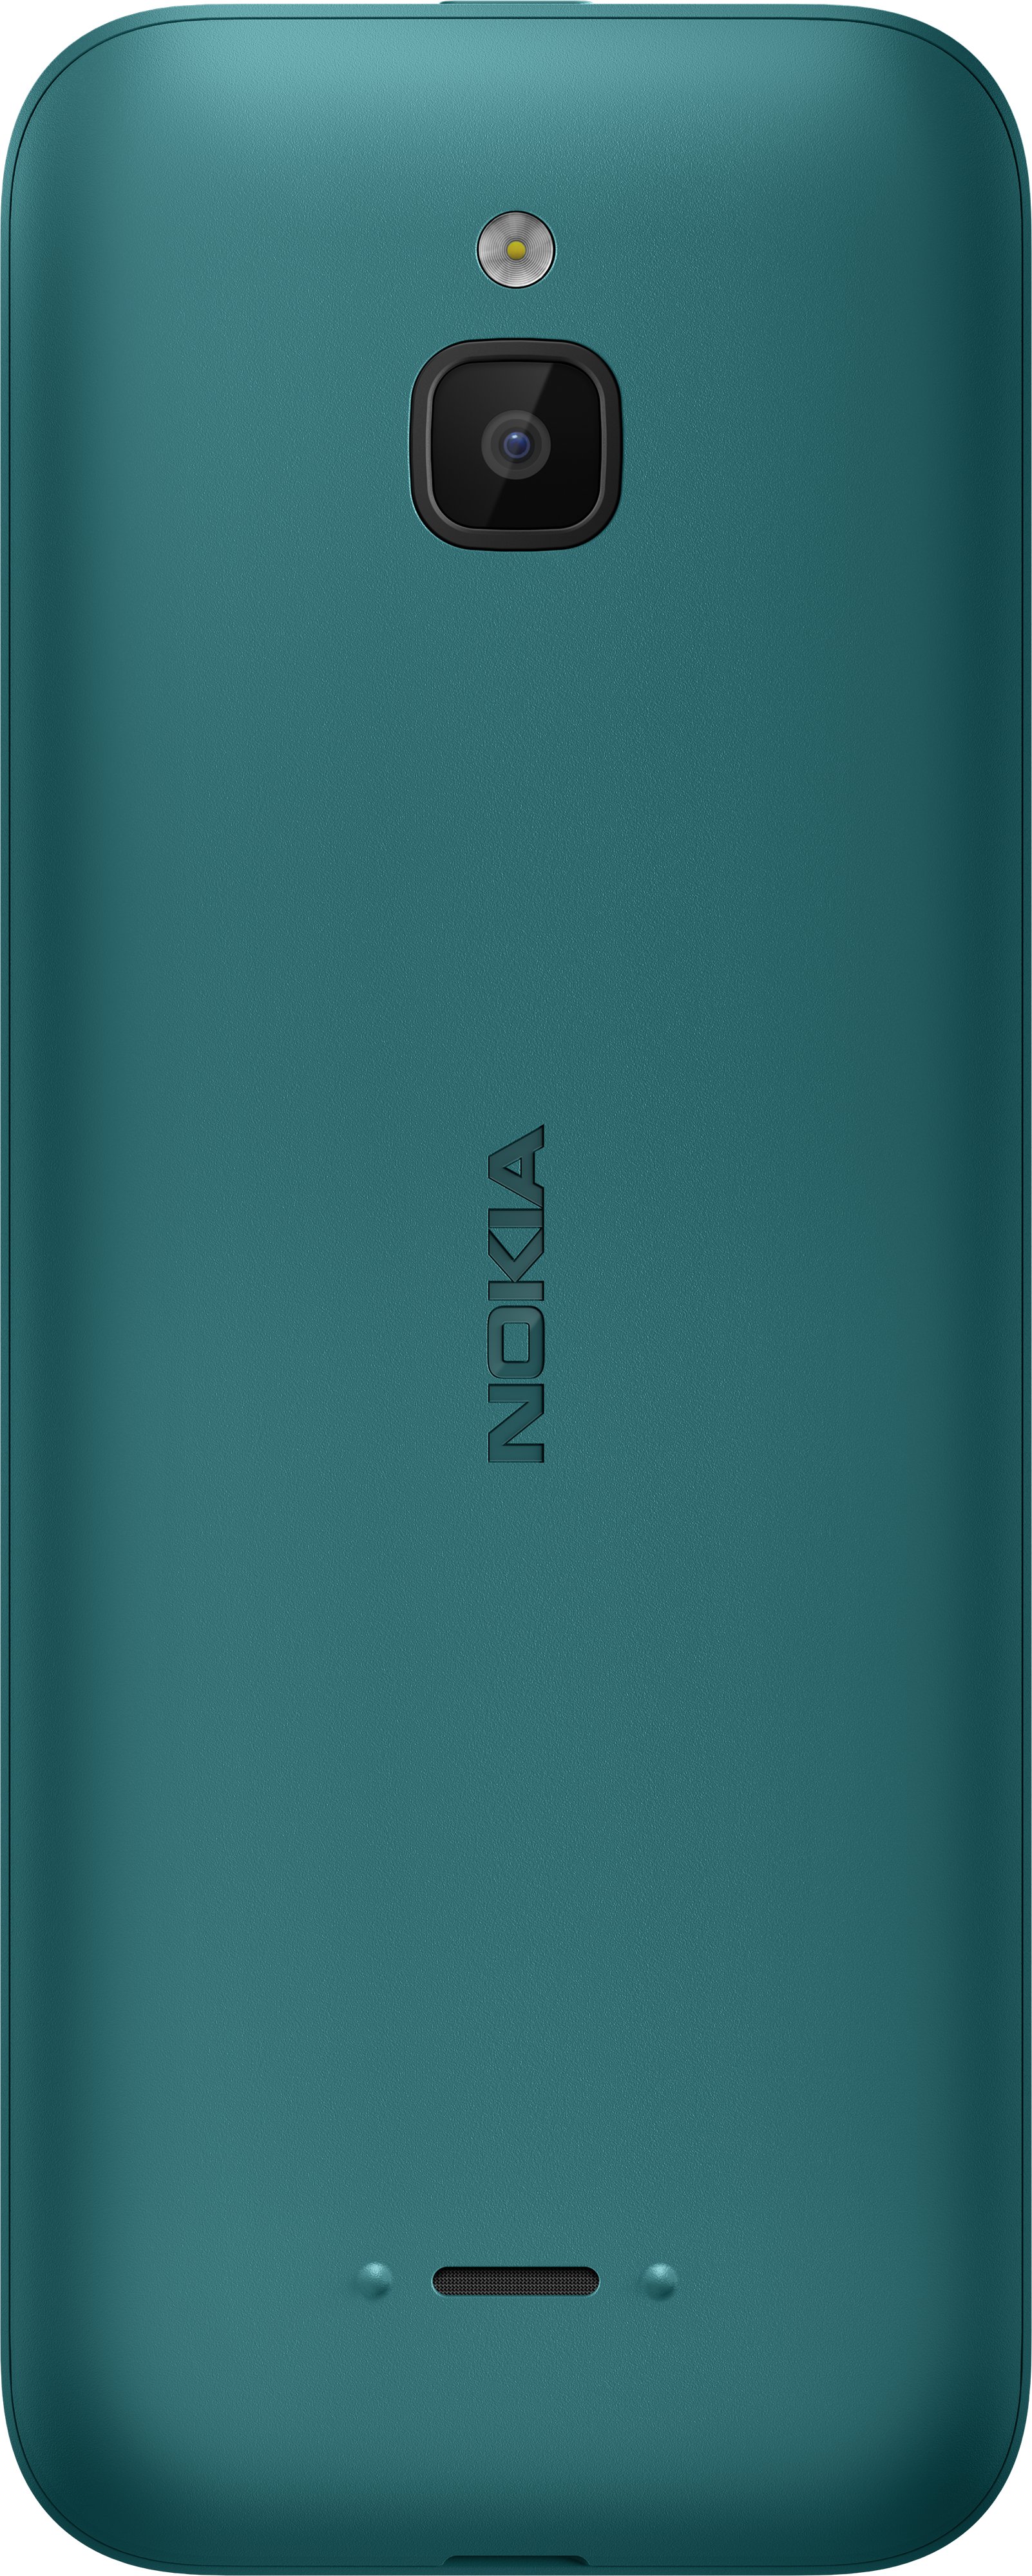 6300 4g купить. Nokia 6300 4g DS Cyan. Nokia 6300 DS ta-1294 4g Cyan. Нокиа 6300 4g. Нокиа 6300 4g характеристики.